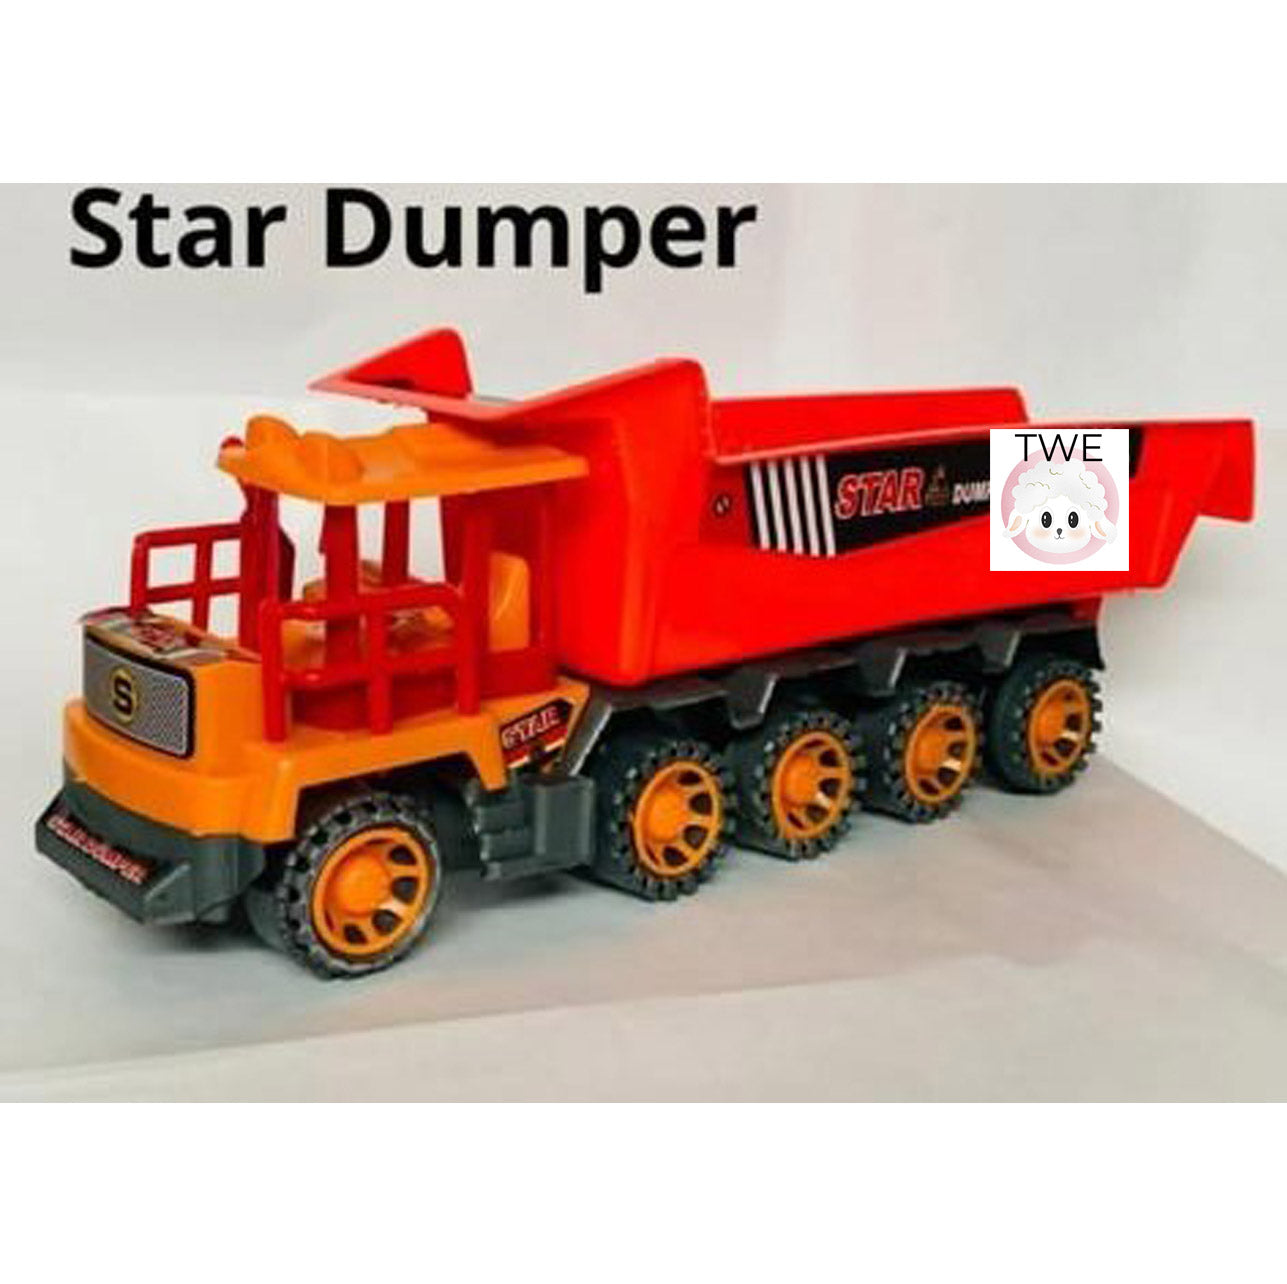 Star Dumper (Friction Based)